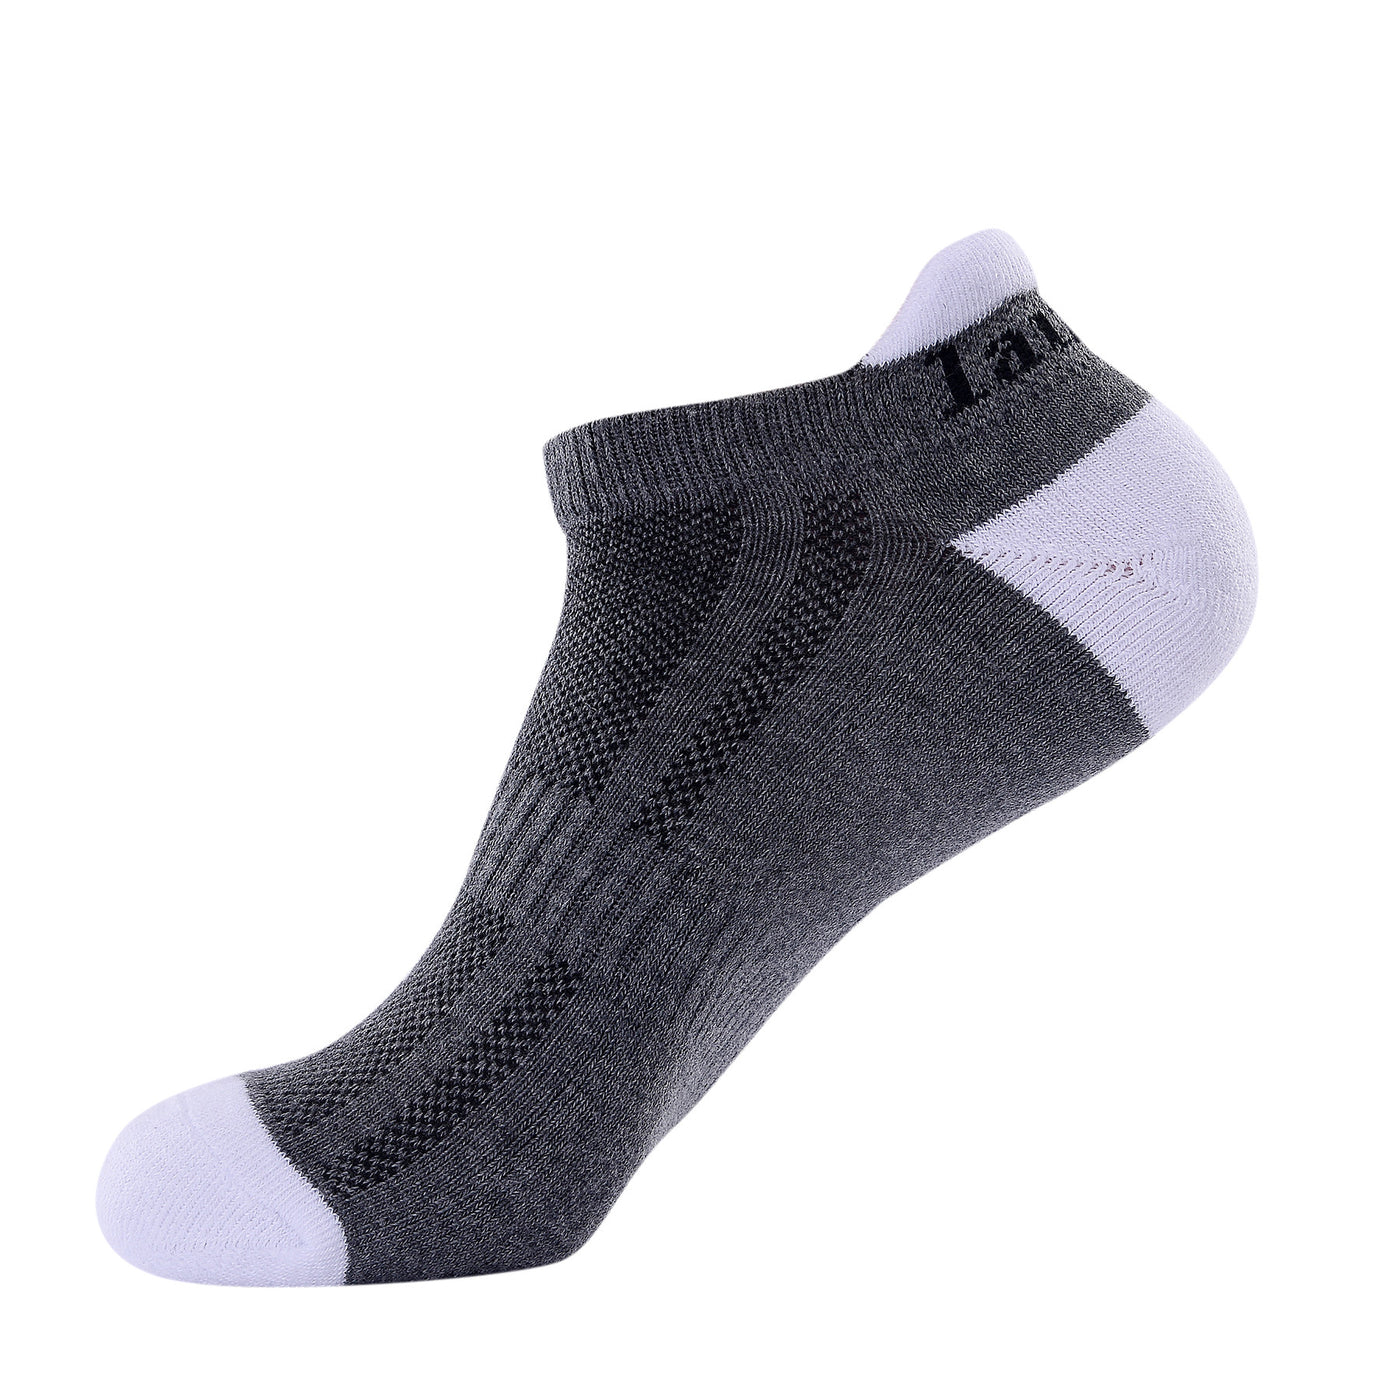 Laulax 4 pairs Mens Professional Coolmax Running Socks, Achilles Tendon Protection, Size UK 7 - 11 / Europe 41 - 46, Gift Set